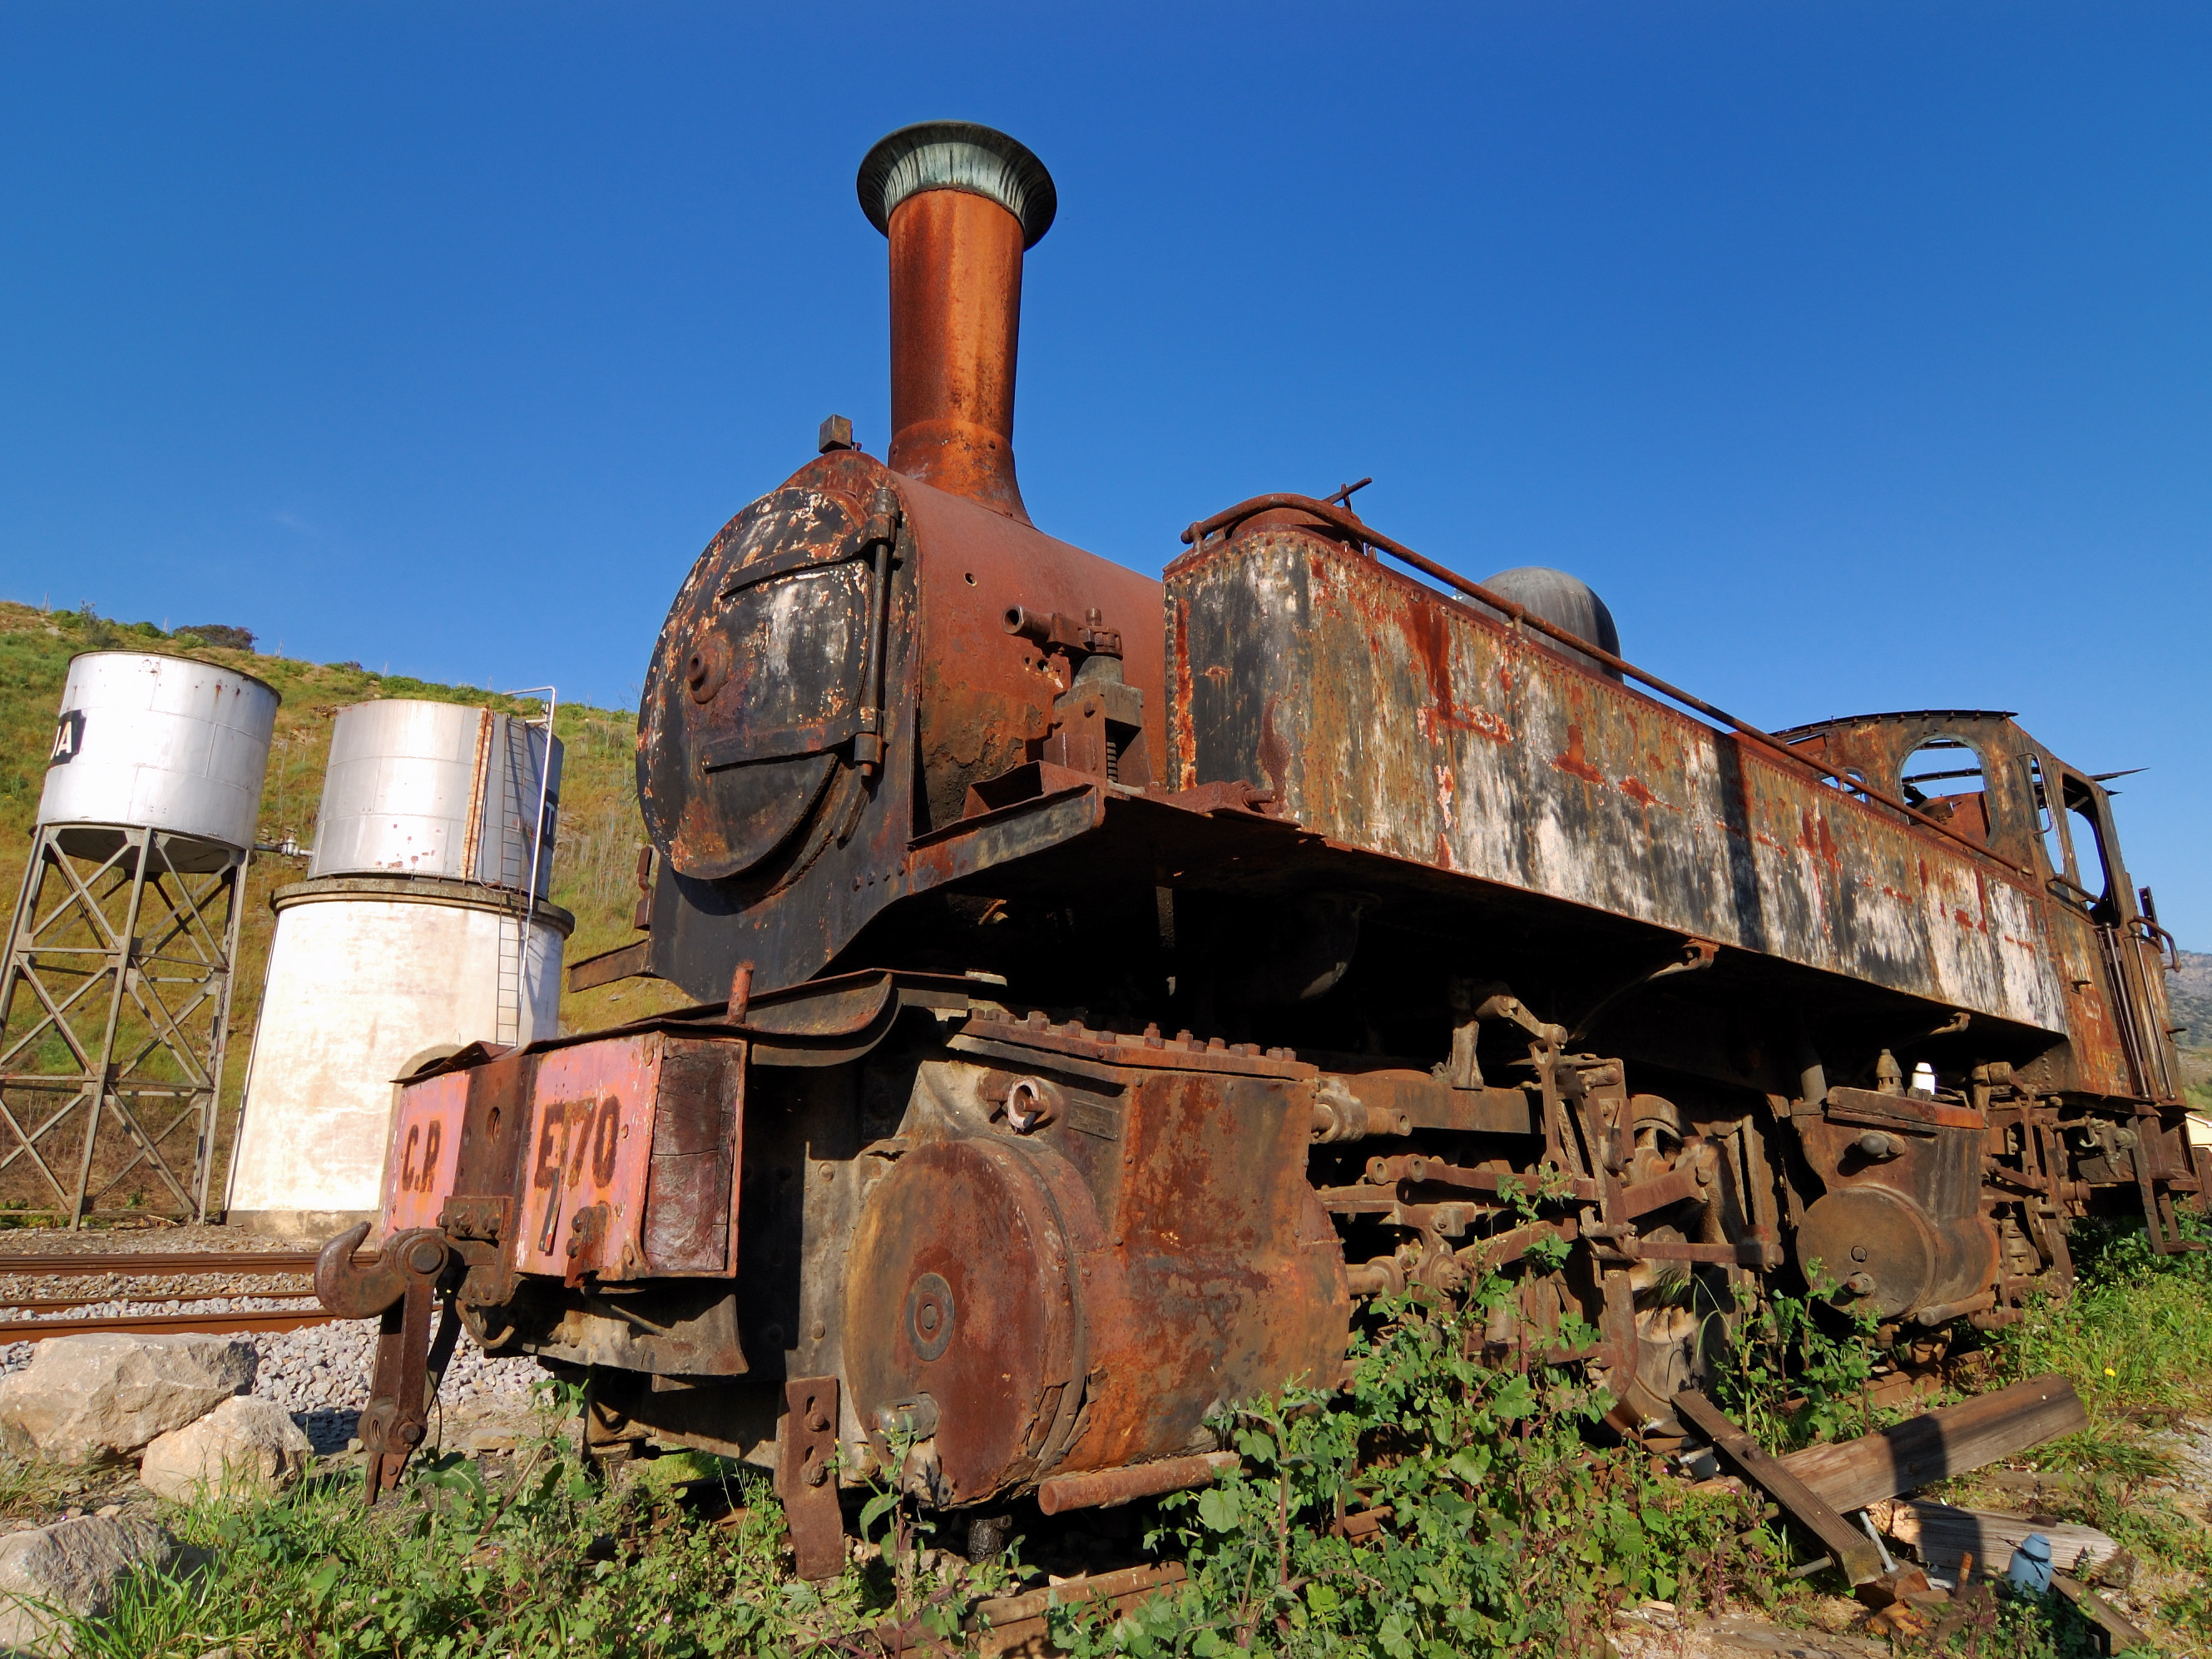 File:Rusty steam locomotive in Tua train station.jpg - Wikimedia Commons